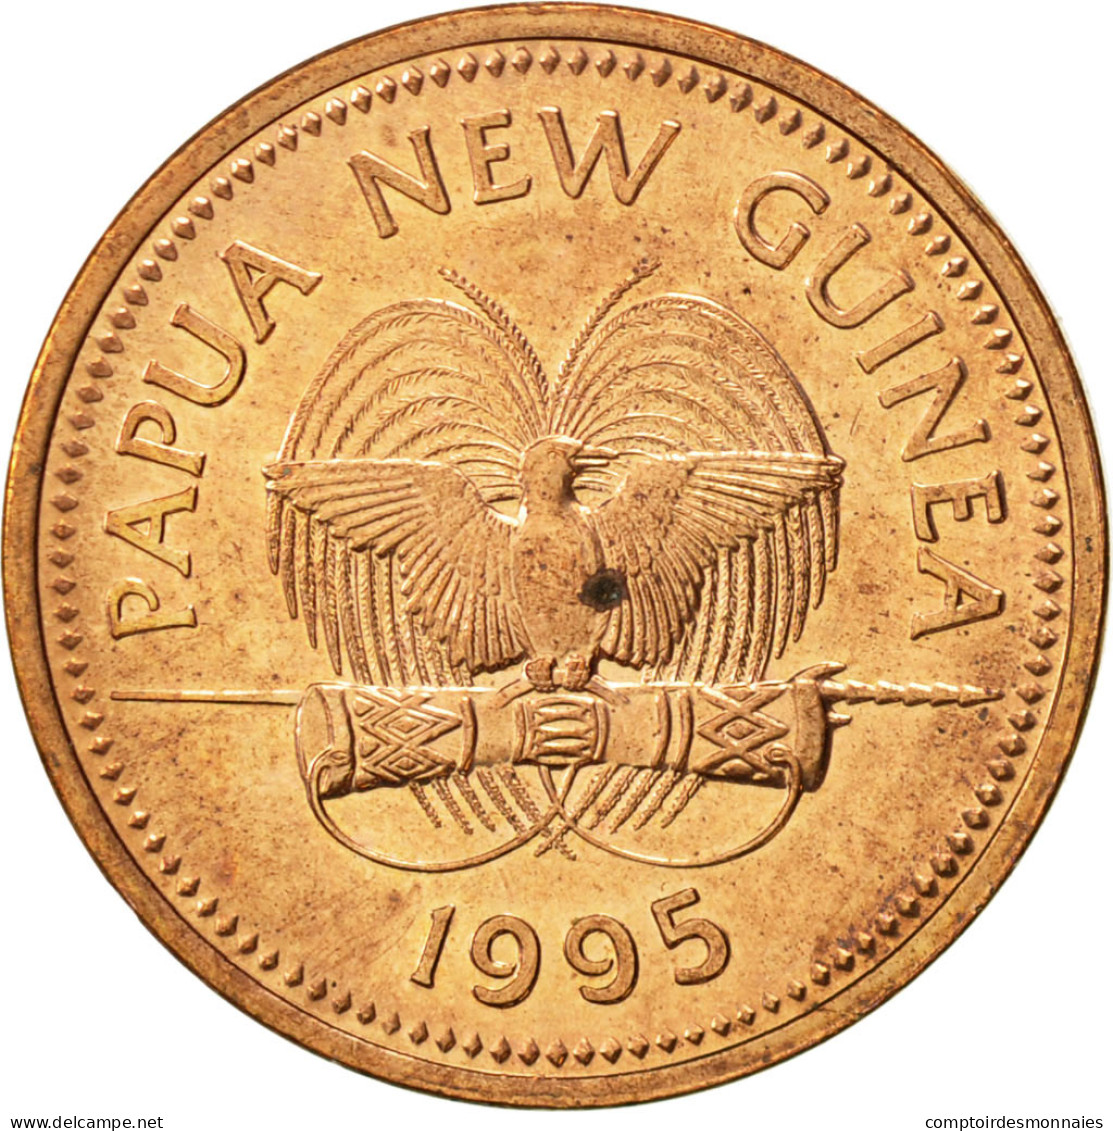 Monnaie, Papua New Guinea, Toea, 1995, SUP, Bronze, KM:1 - Papúa Nueva Guinea